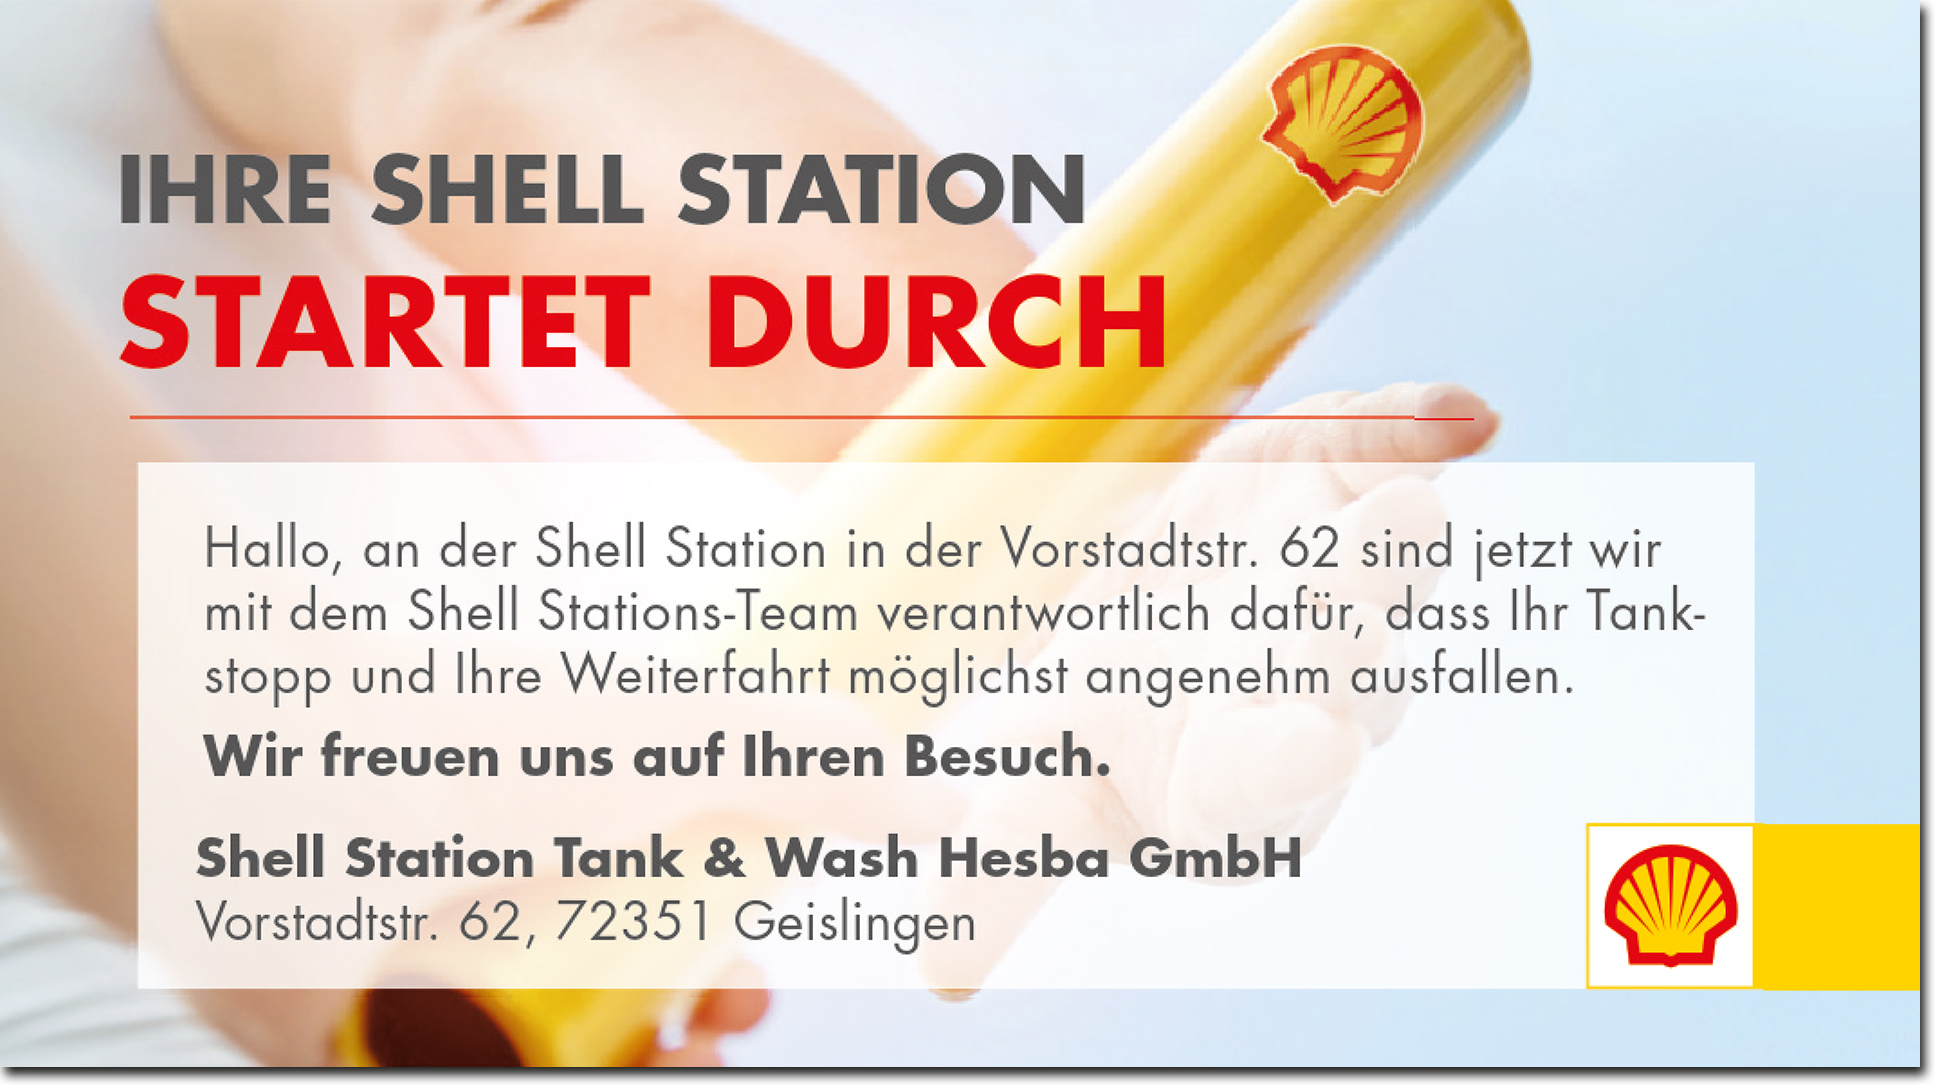 Tank & Wash Hesba GmbH